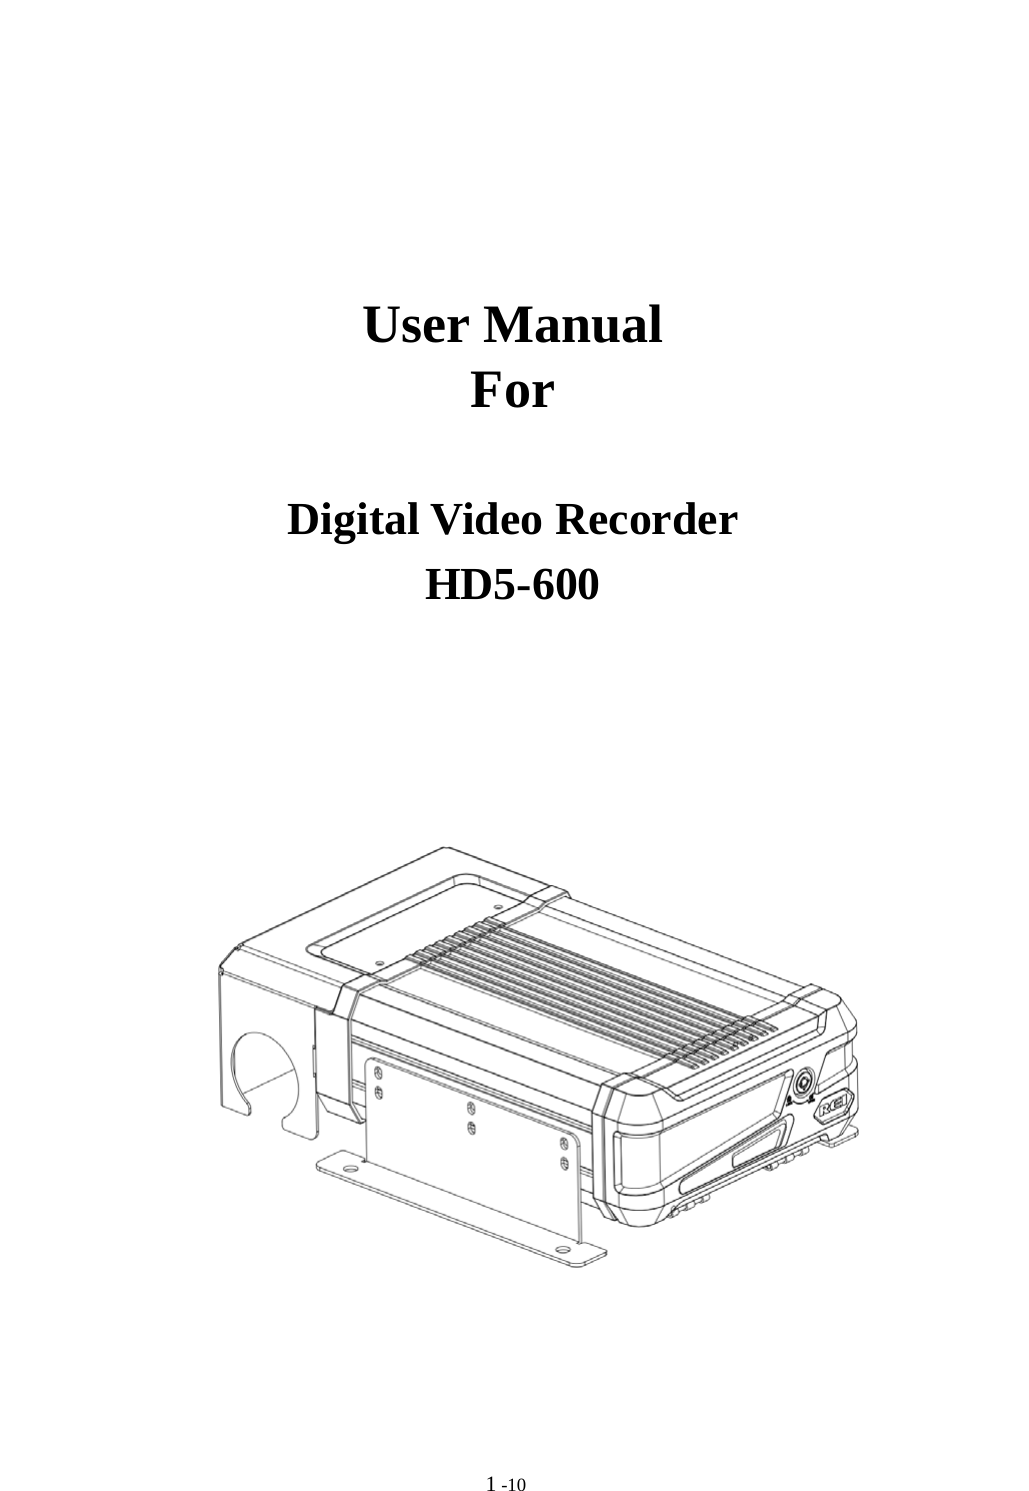                                                                                                                                                         1-10             User Manual For  Digital Video Recorder HD5-600                                                                                                                